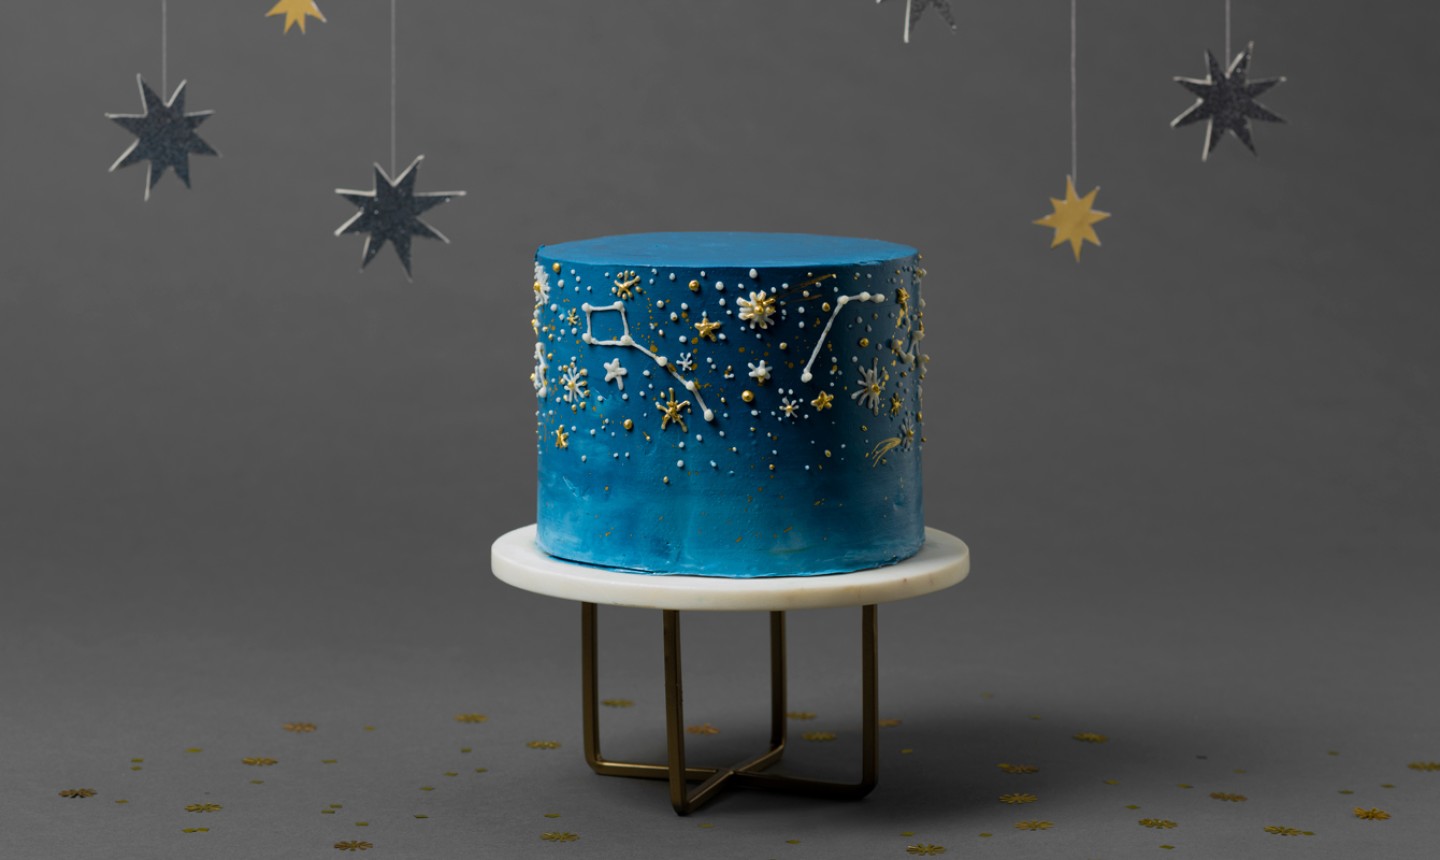 Constellation cake